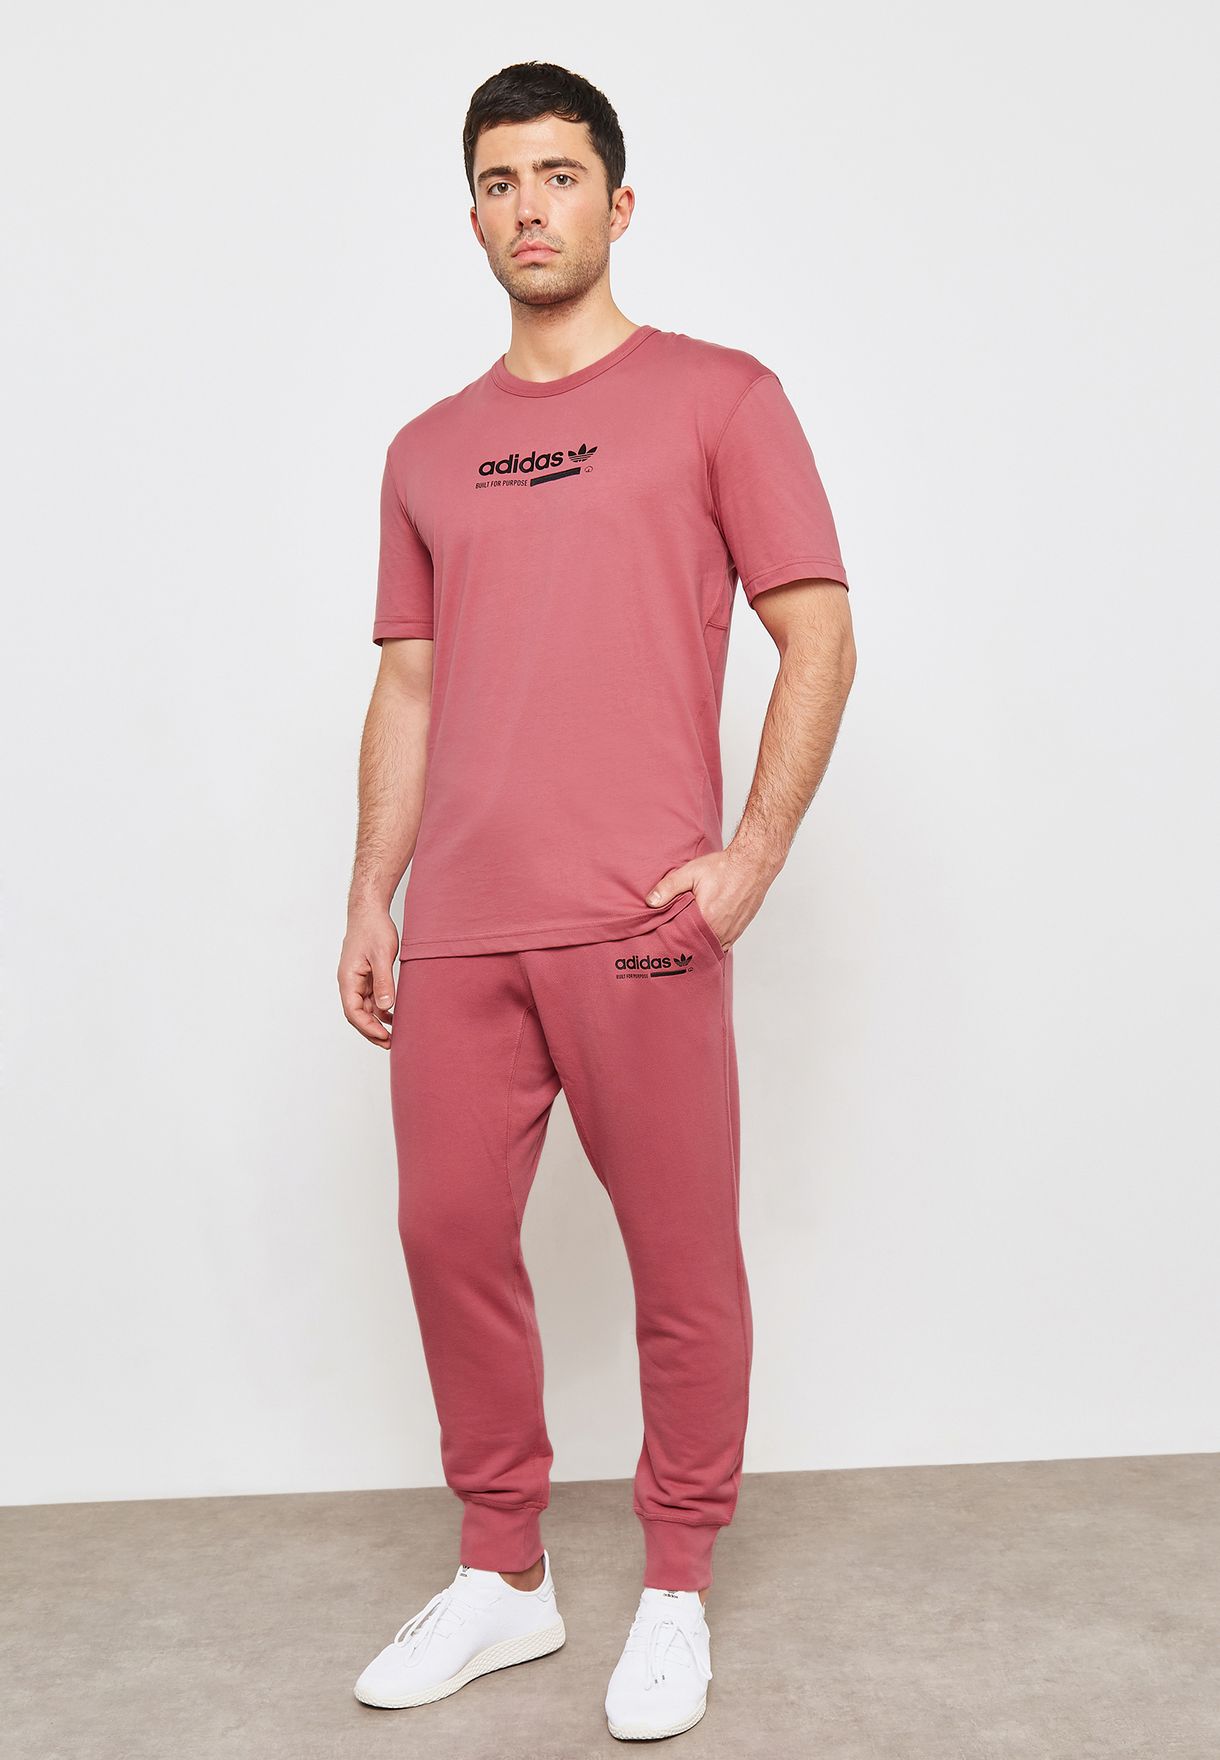 adidas pink sweatpants mens